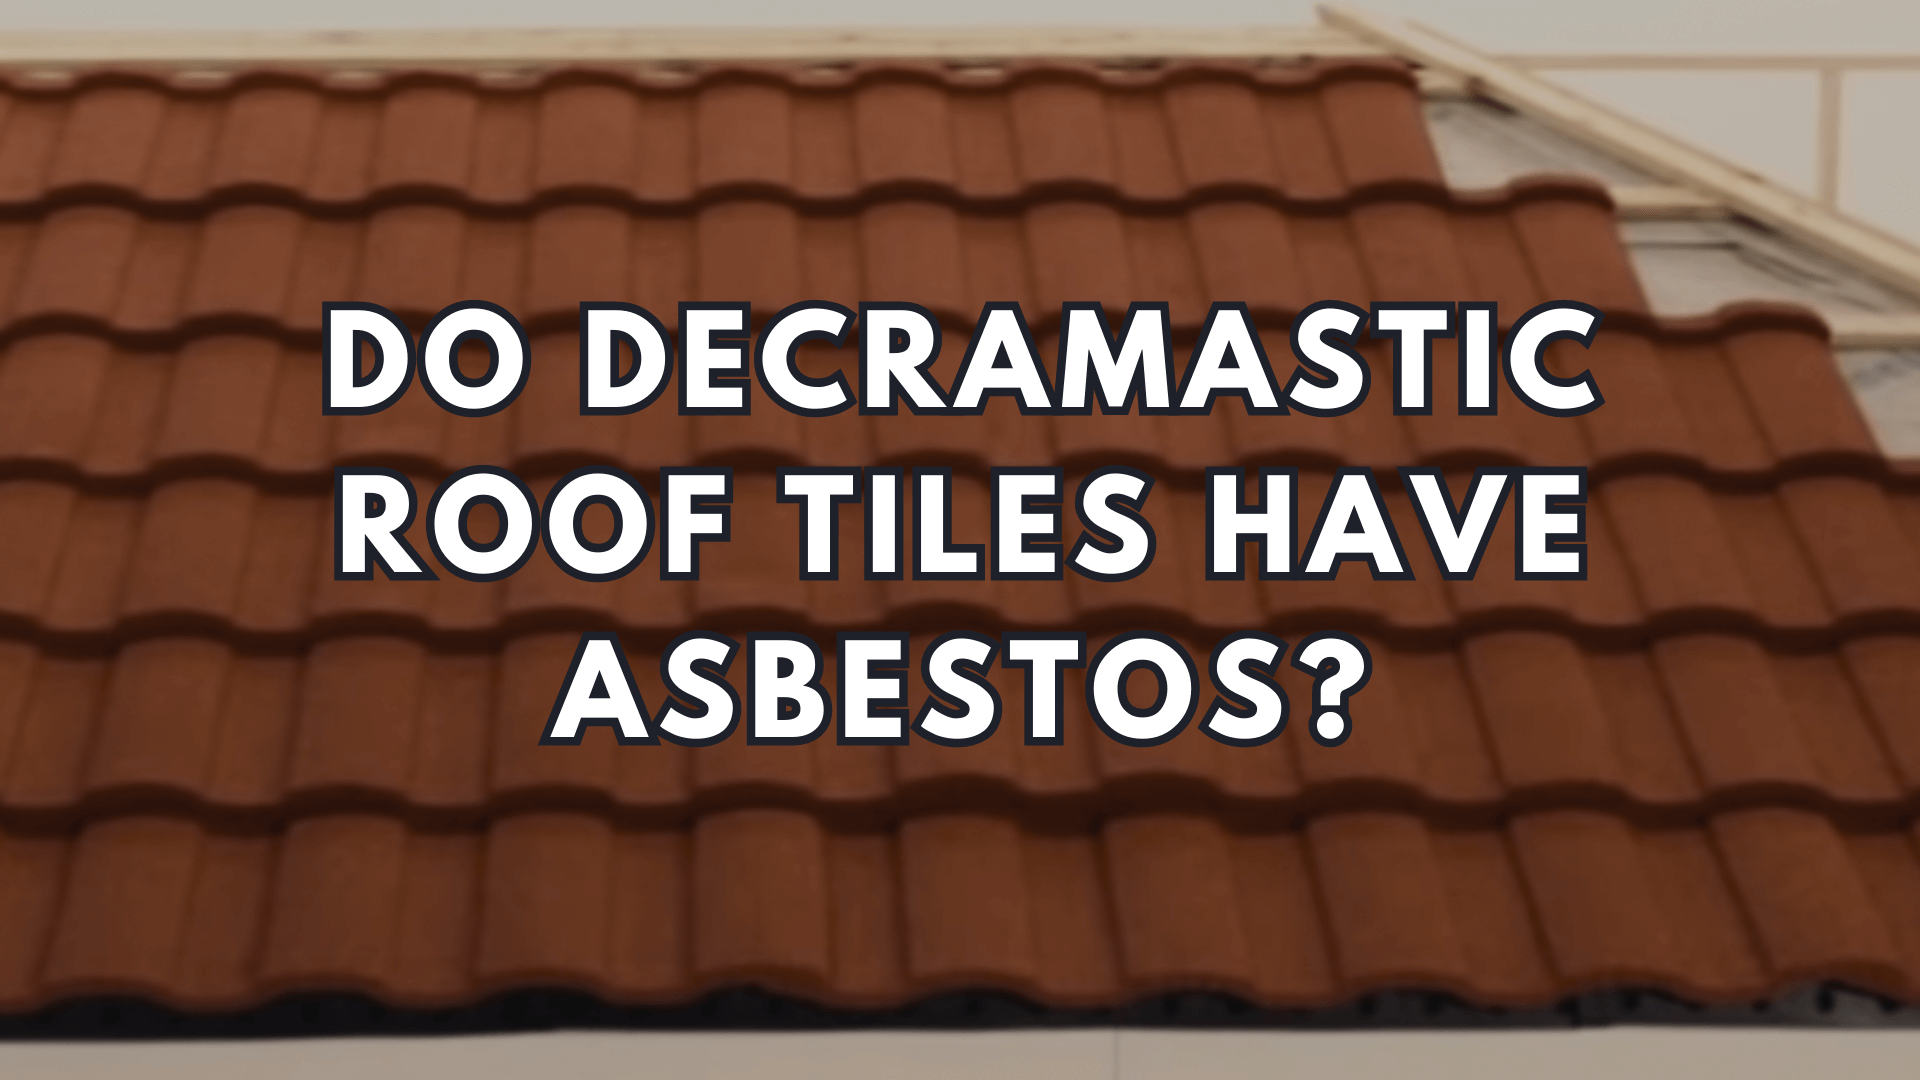 Do Decramastic Roof Tiles Have Asbestos?